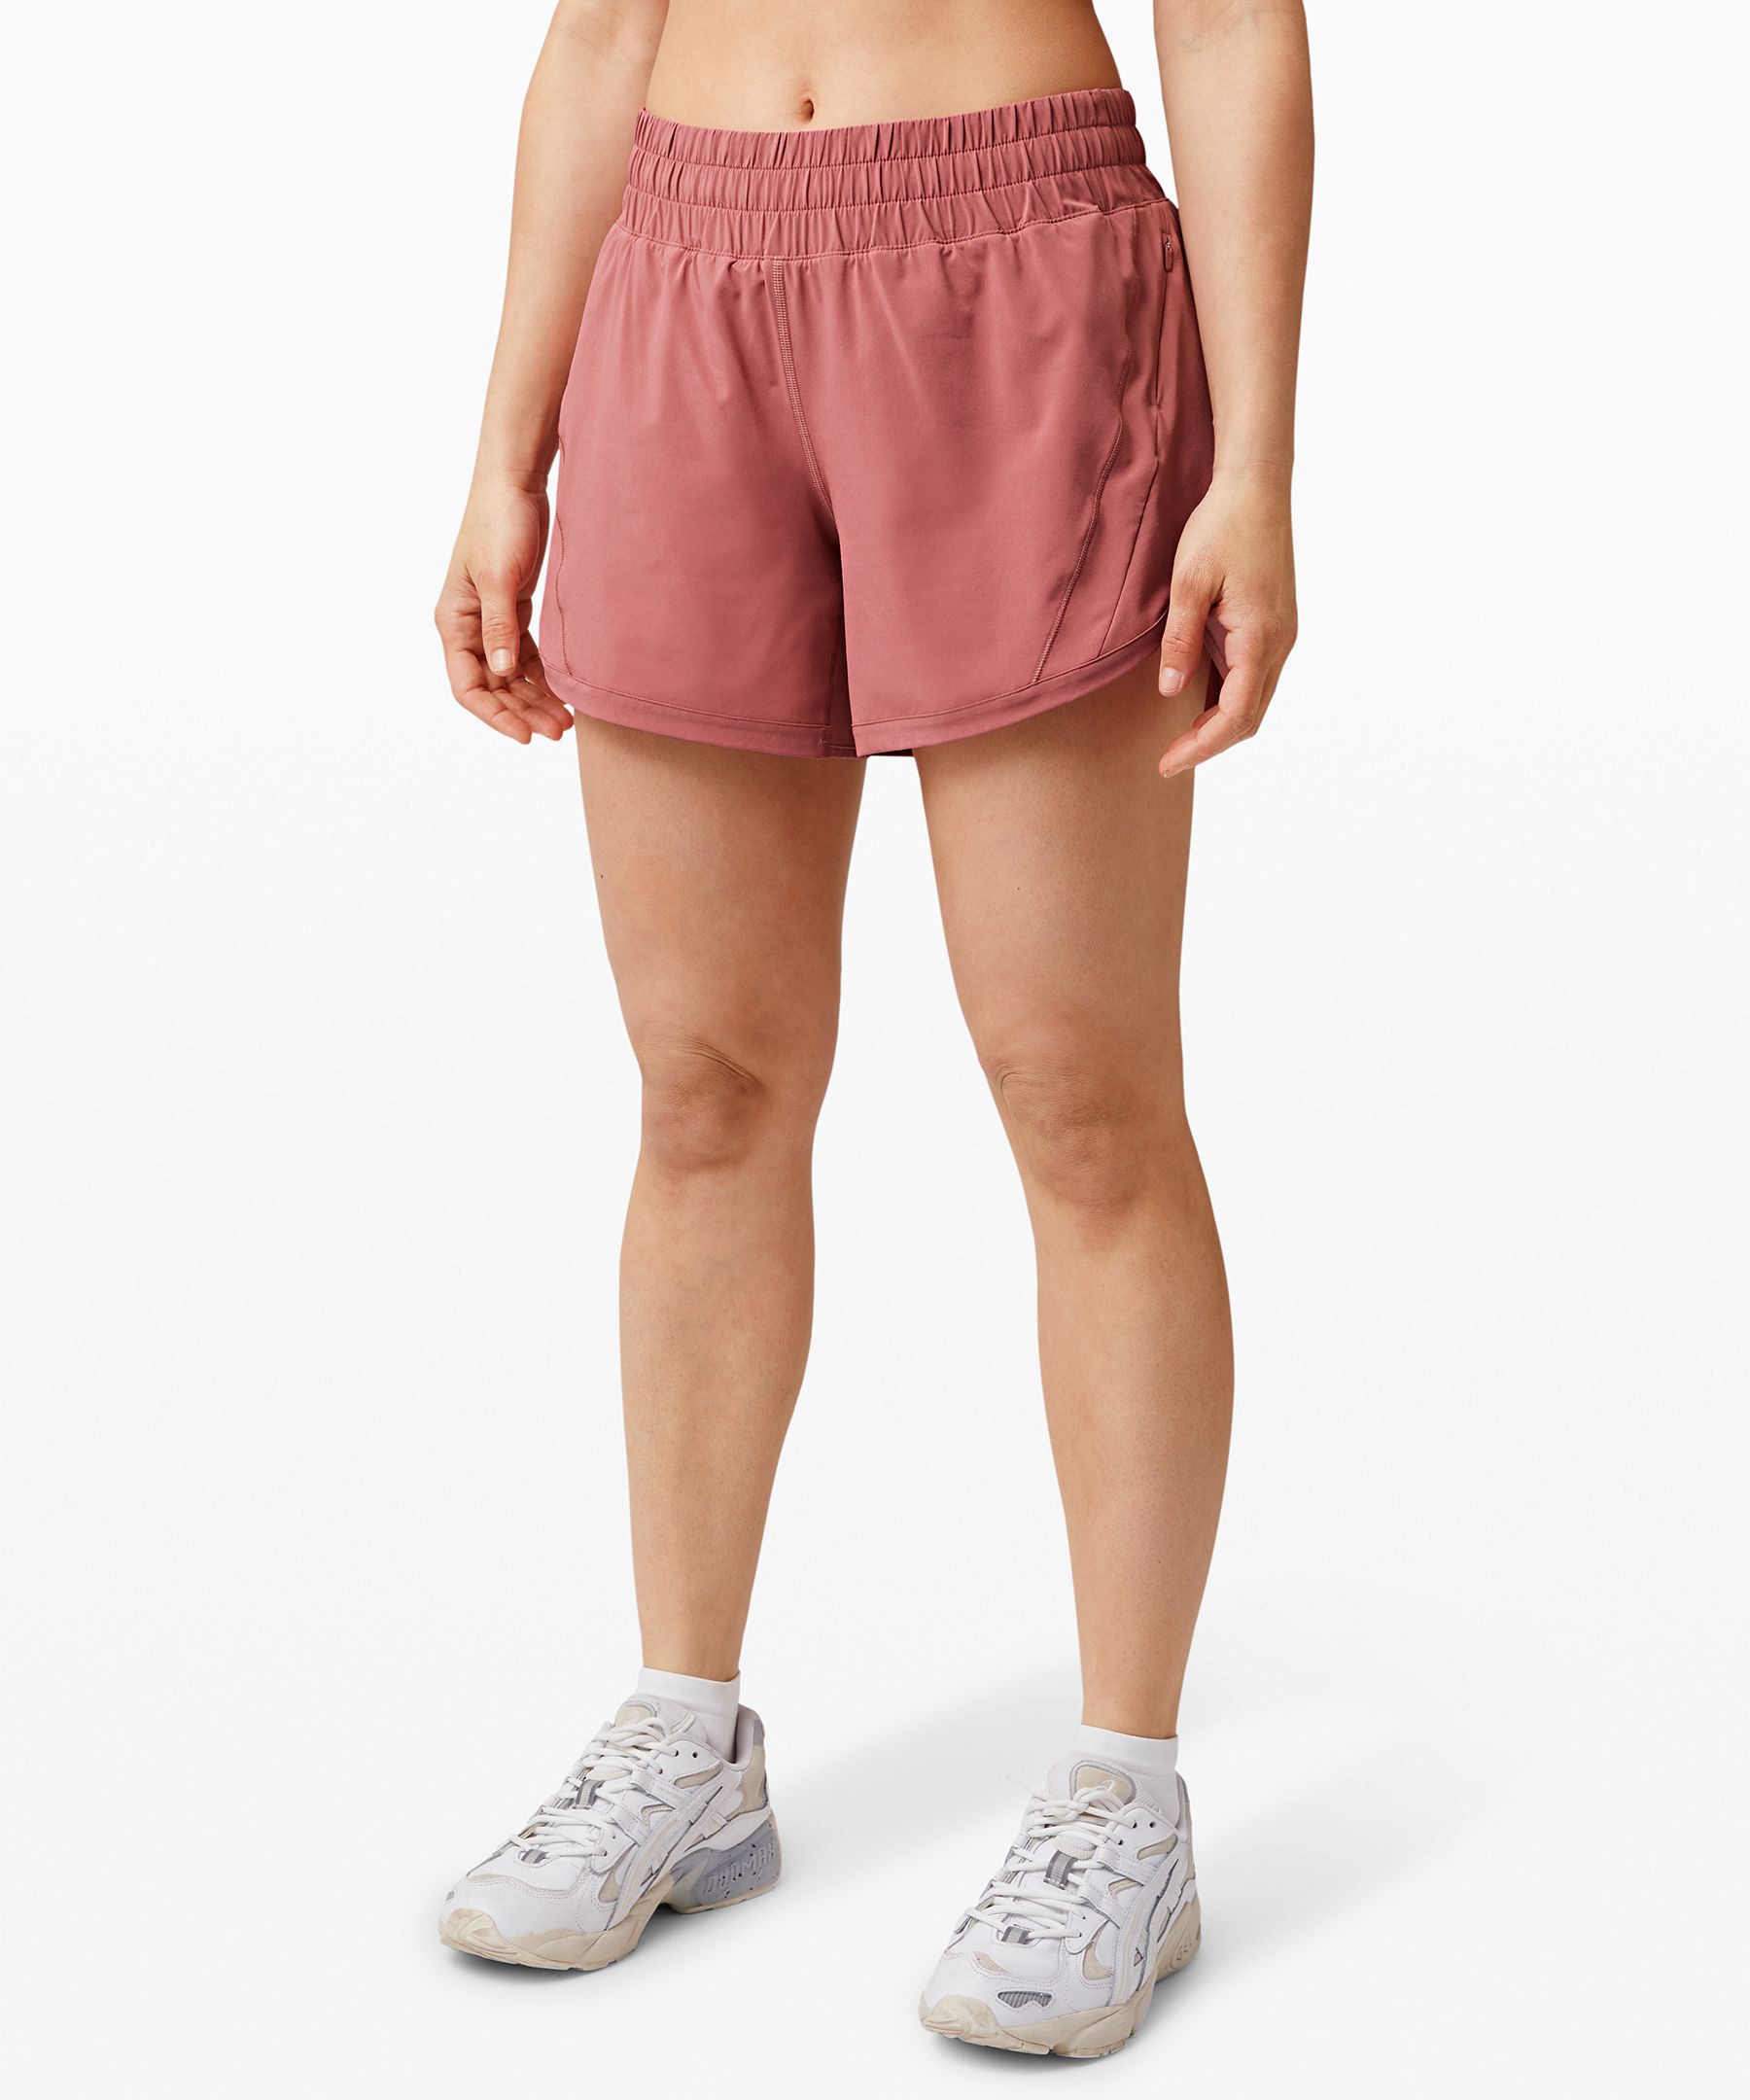 lululemon walking shorts, OFF 72%,Cheap 